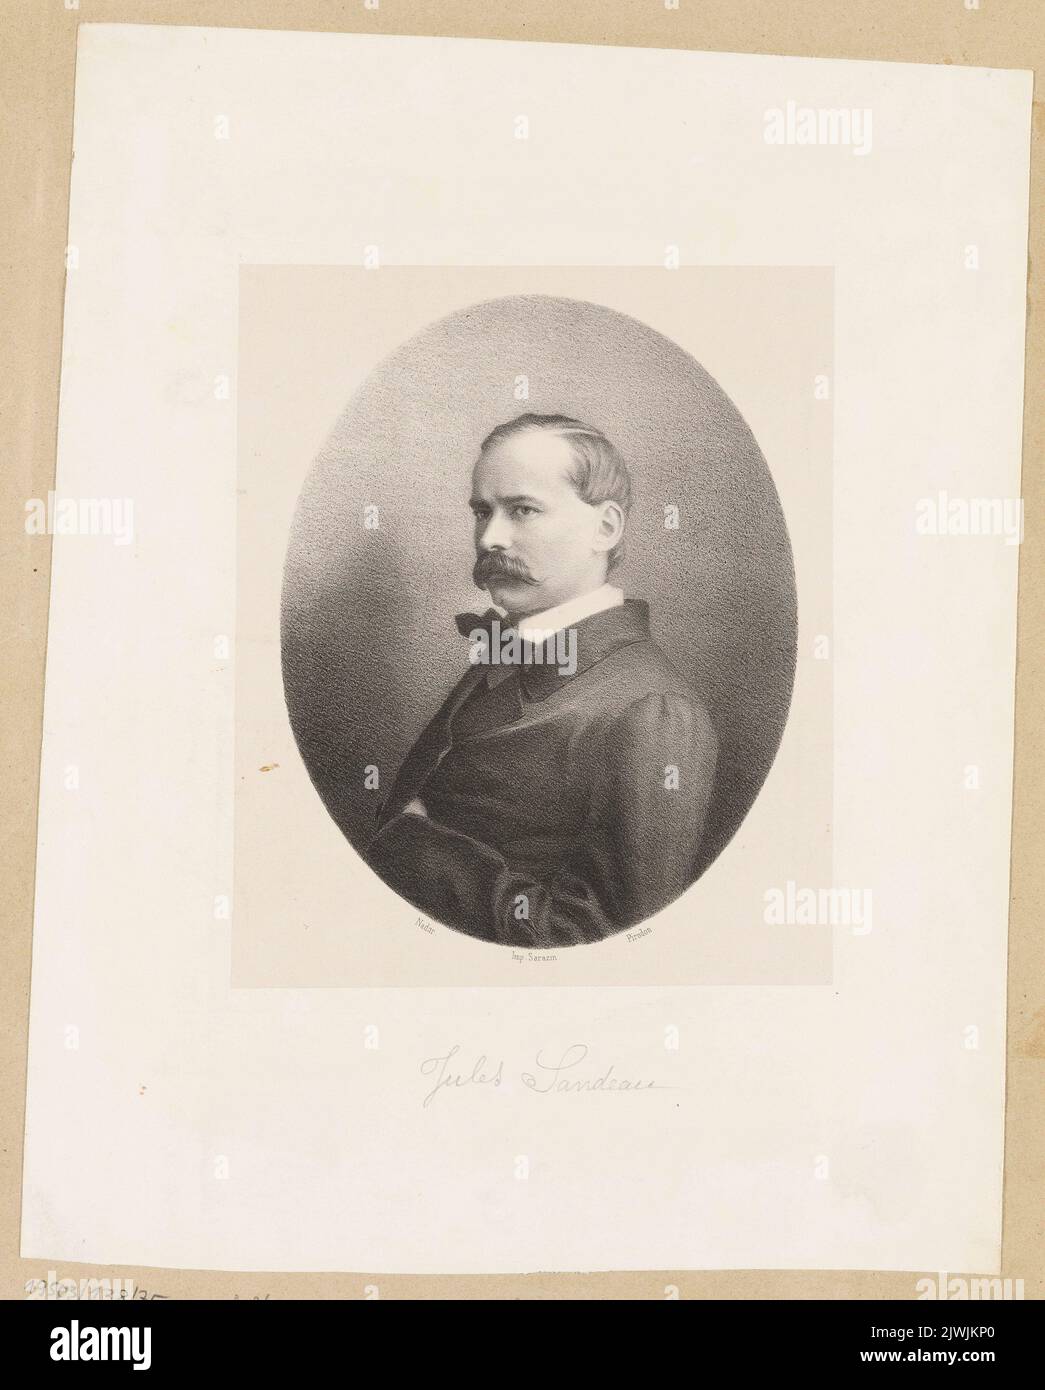 Portrait of Jules Sandeau. Sarazin (Paryż ; drukarnia ; fl. ca 1846-1880), printing house, Nadar (1820-1910), photographer, Pirodon, Louis-Eugene (1824-ca 1908), graphic artist Stock Photo